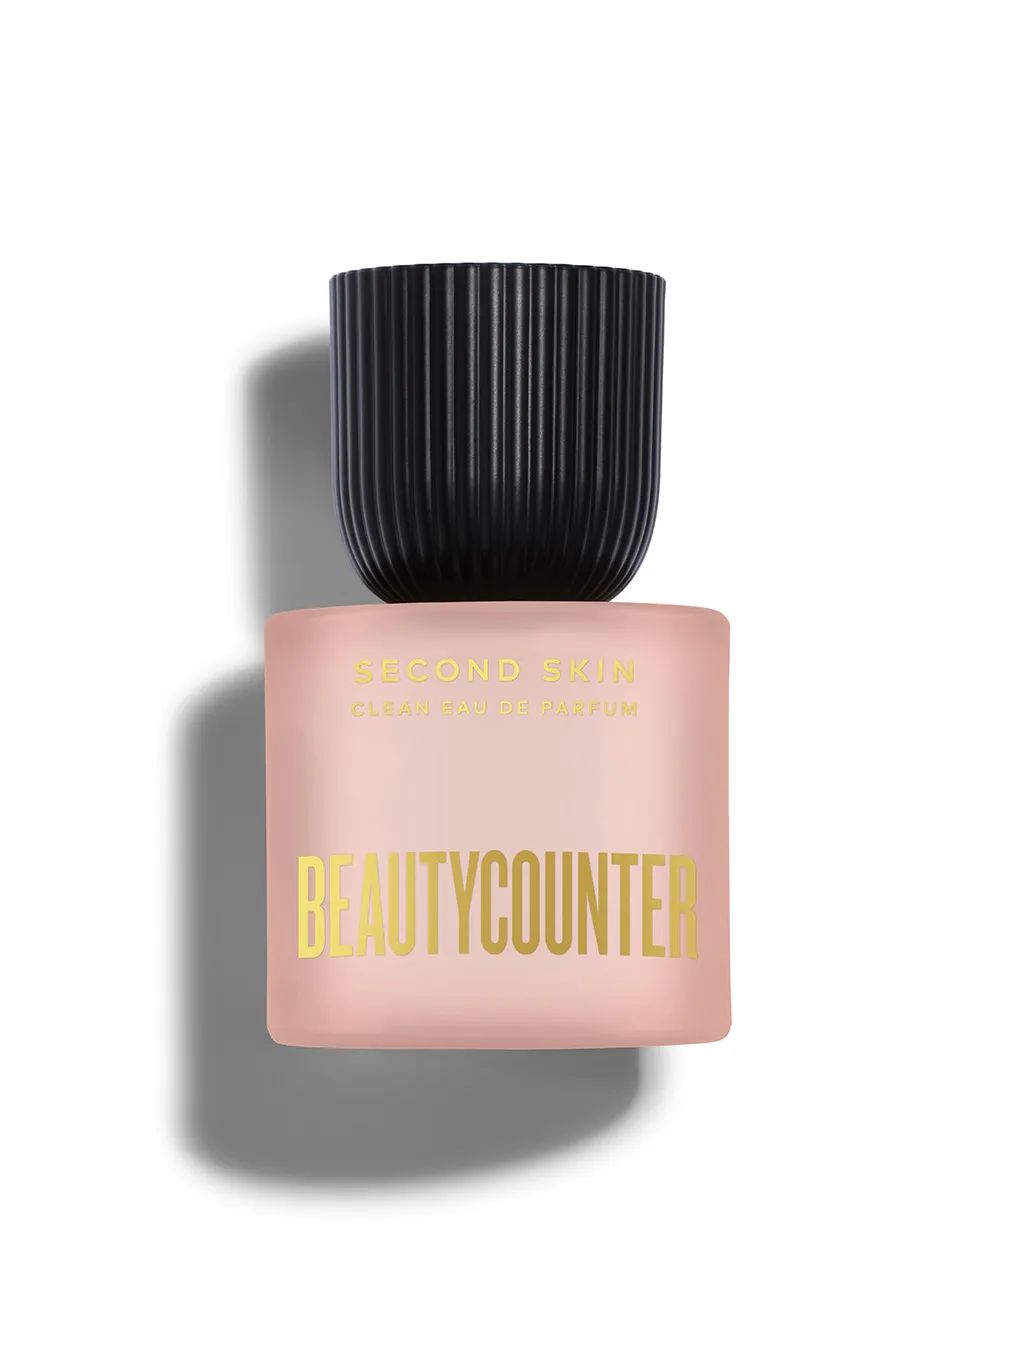 Second Skin Clean Eau De Parfum - Beautycounter - Skin Care, Makeup, Bath and Body and more! | Beautycounter.com